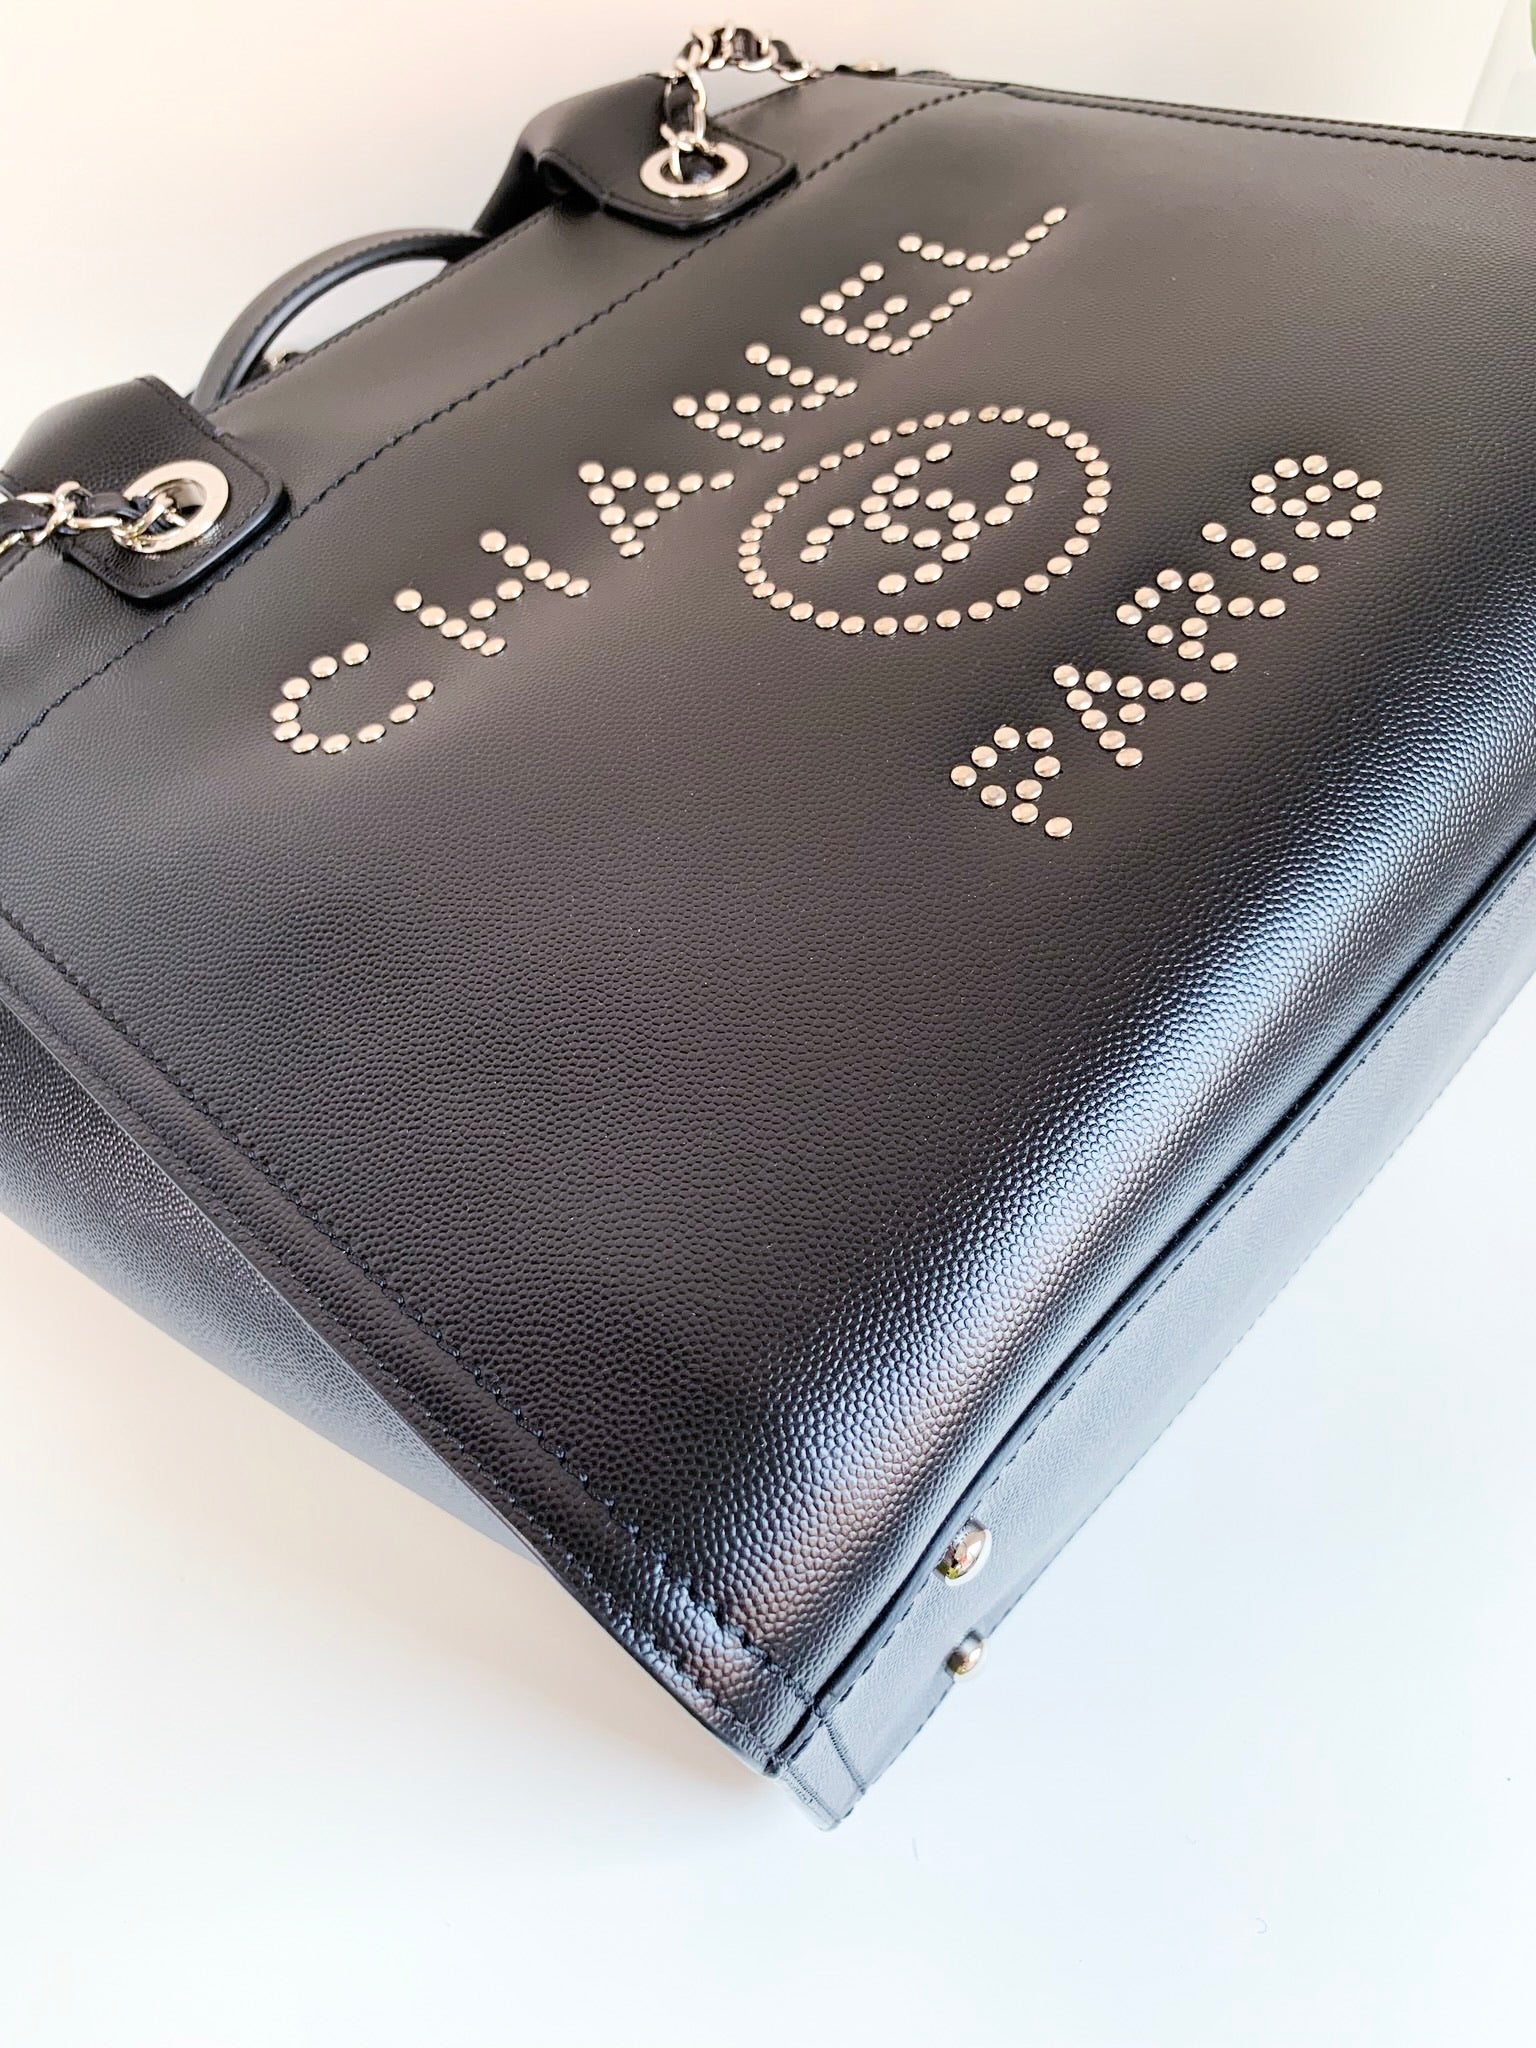 Chanel Small Studded Deauville Tote Black Caviar Silver Hardware